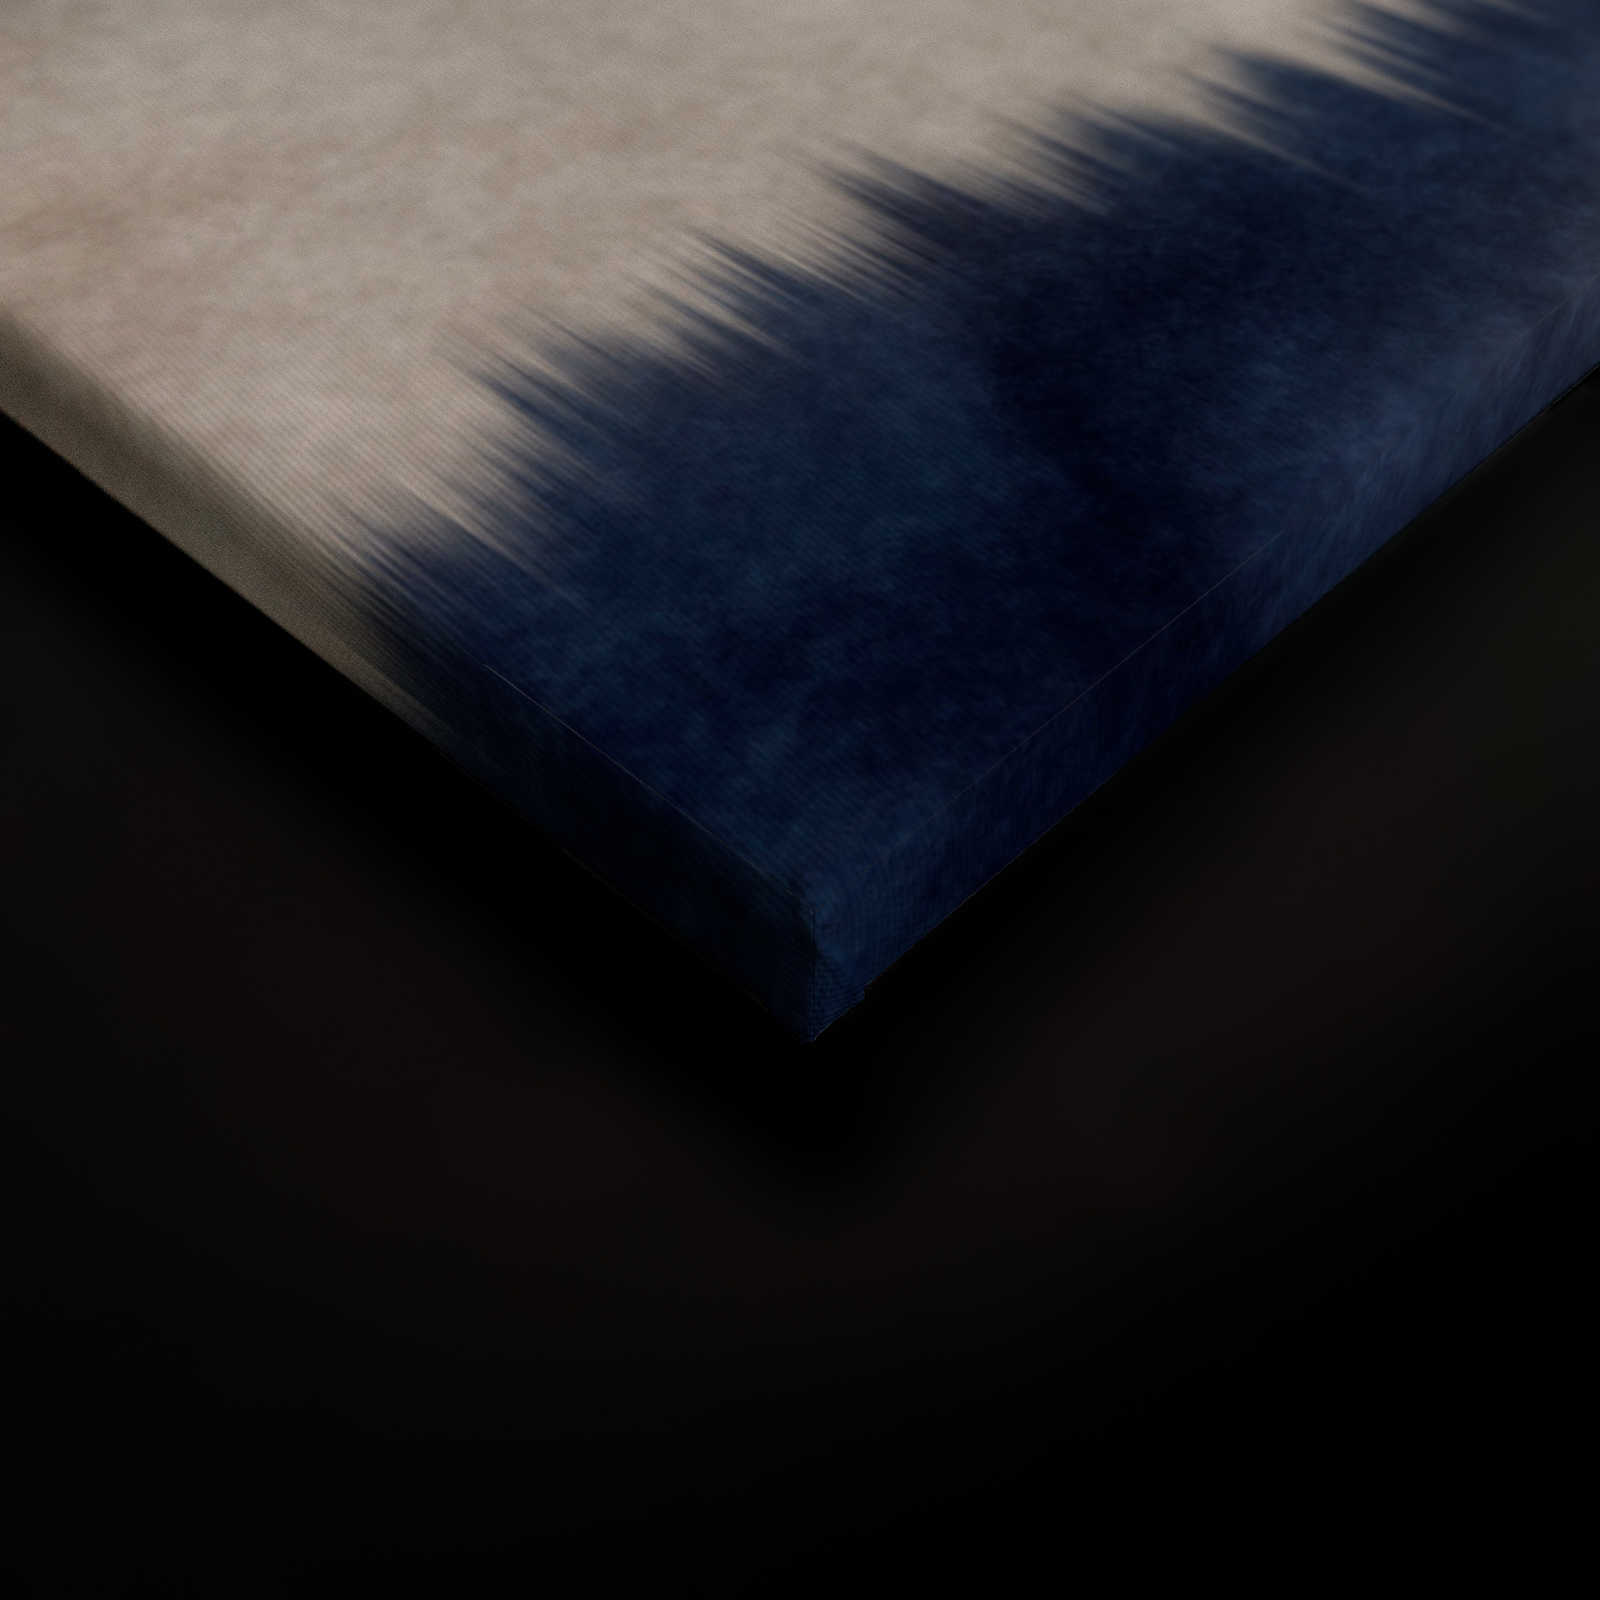             Leinwandbild abstraktes Muster Wellen | blau, weiß – 1,20 m x 0,80 m
        